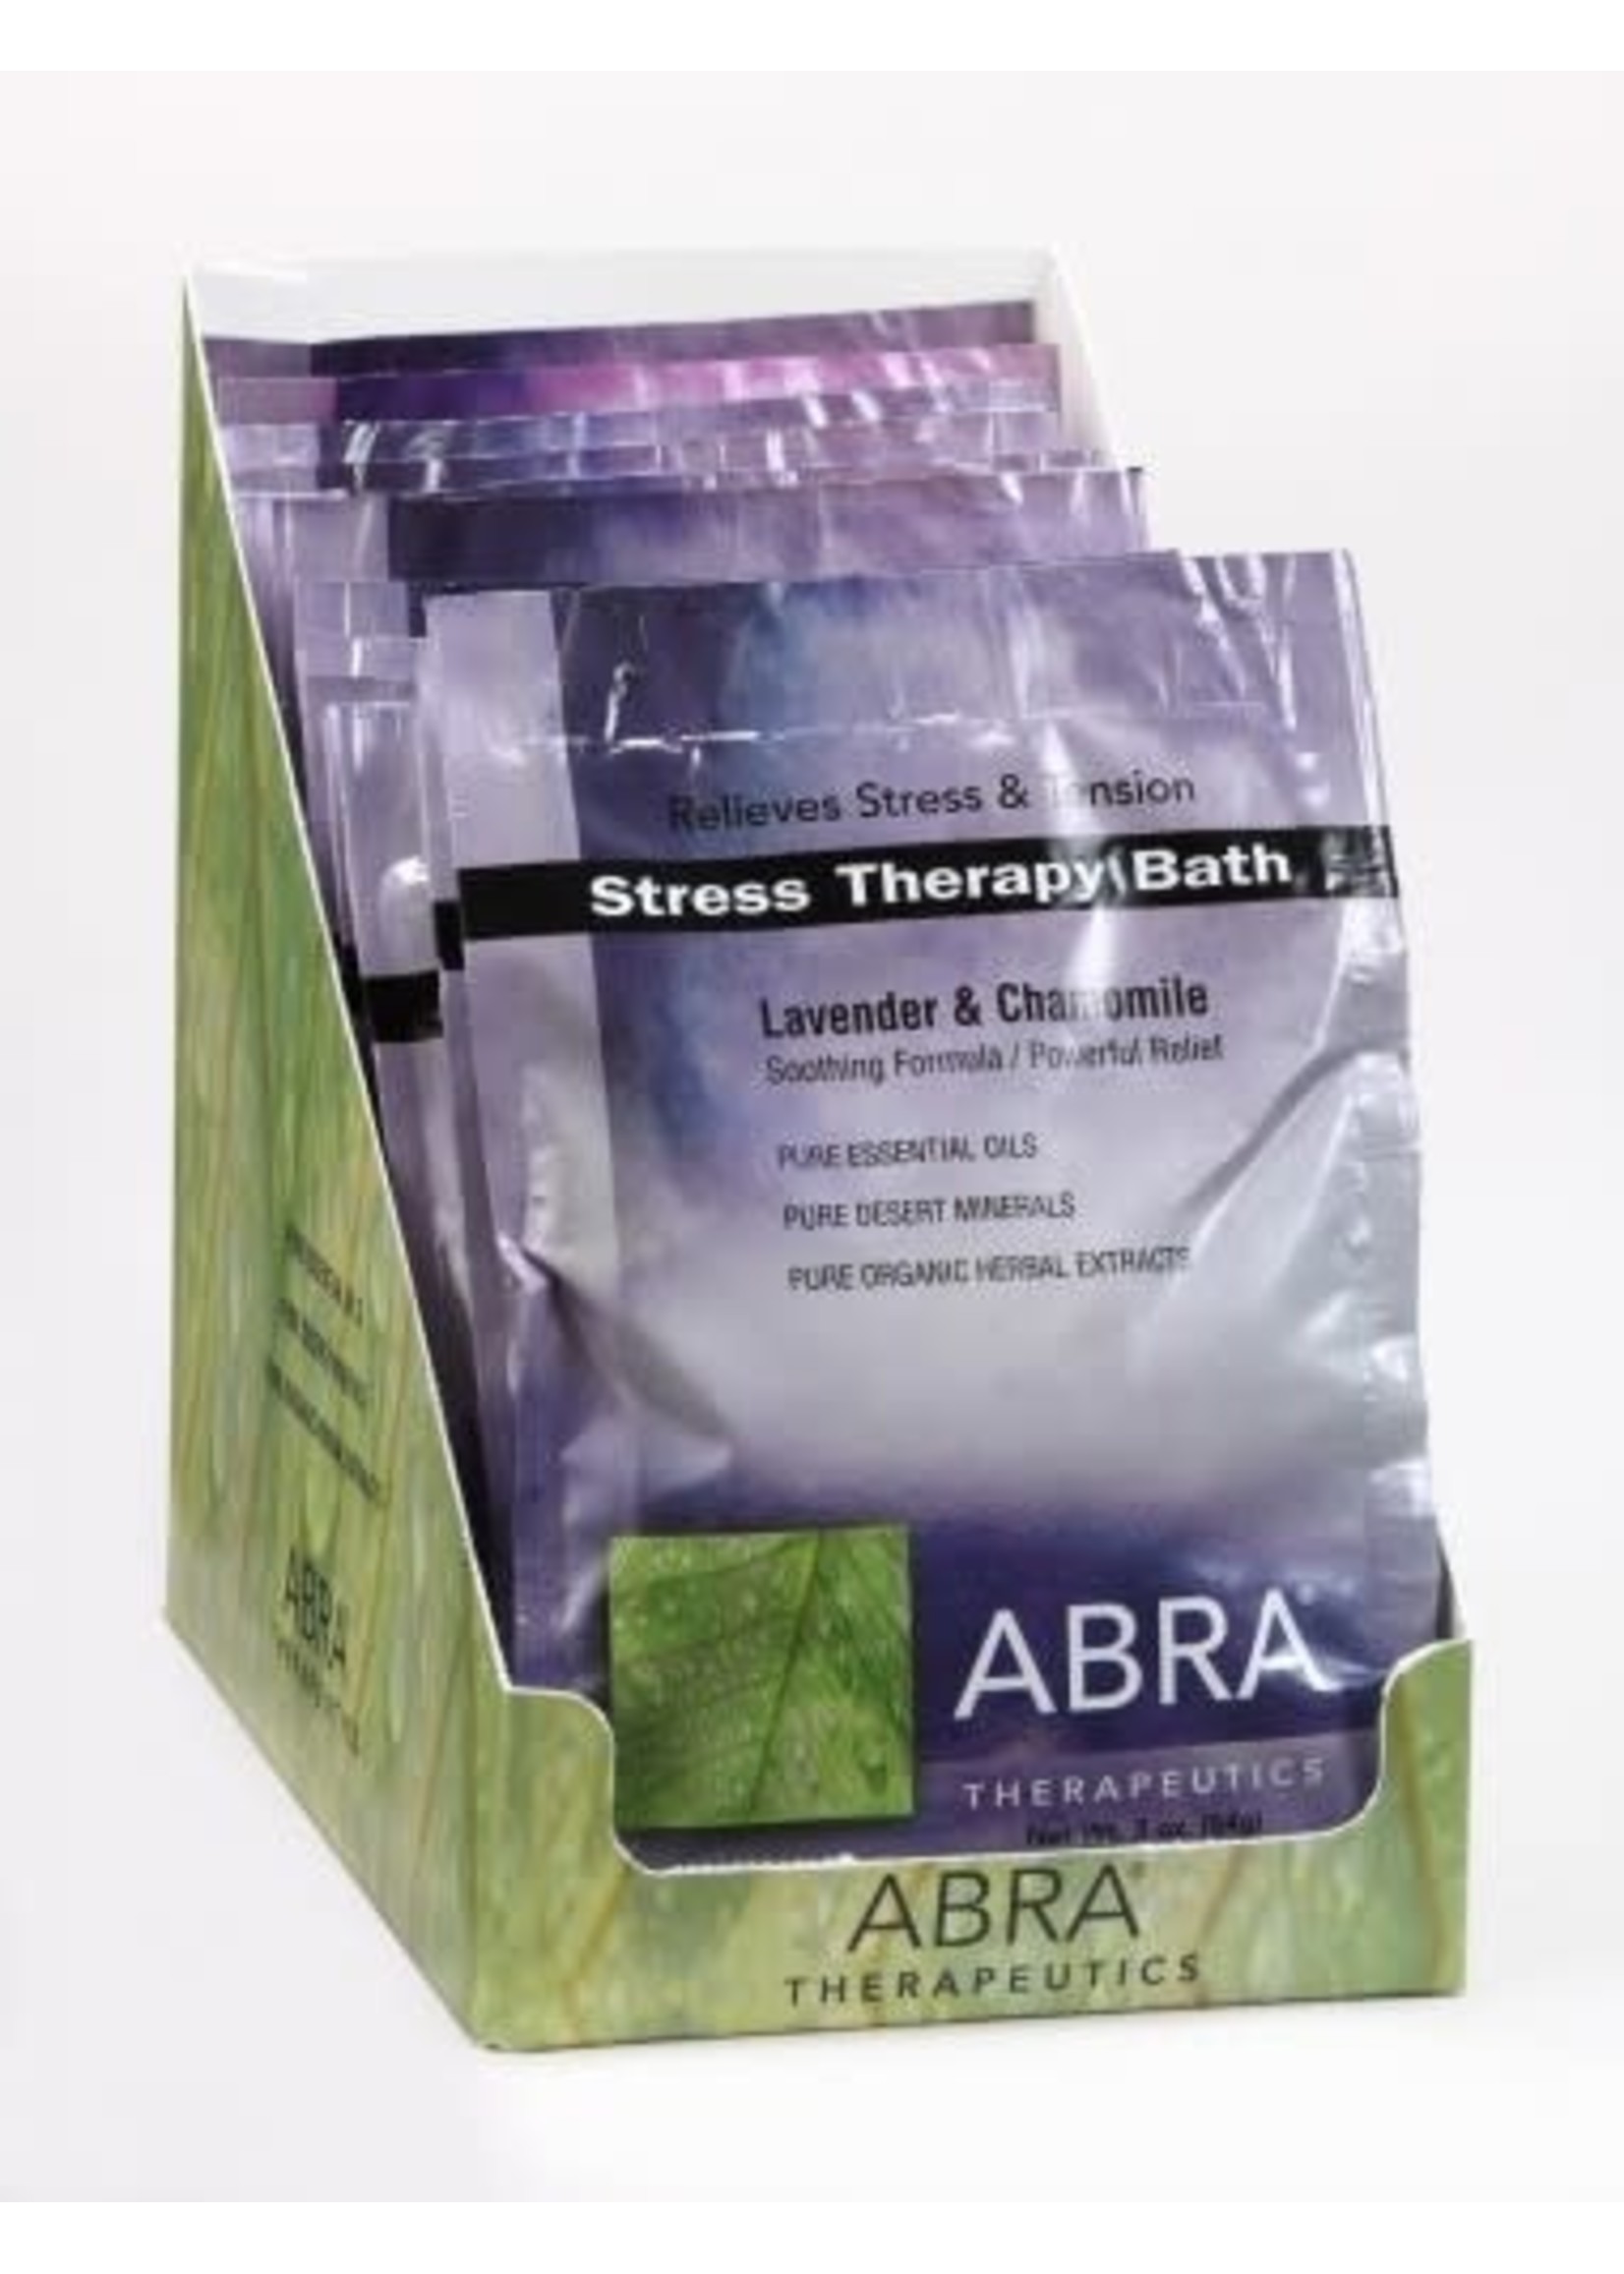 ABRA Therapeutics Packets